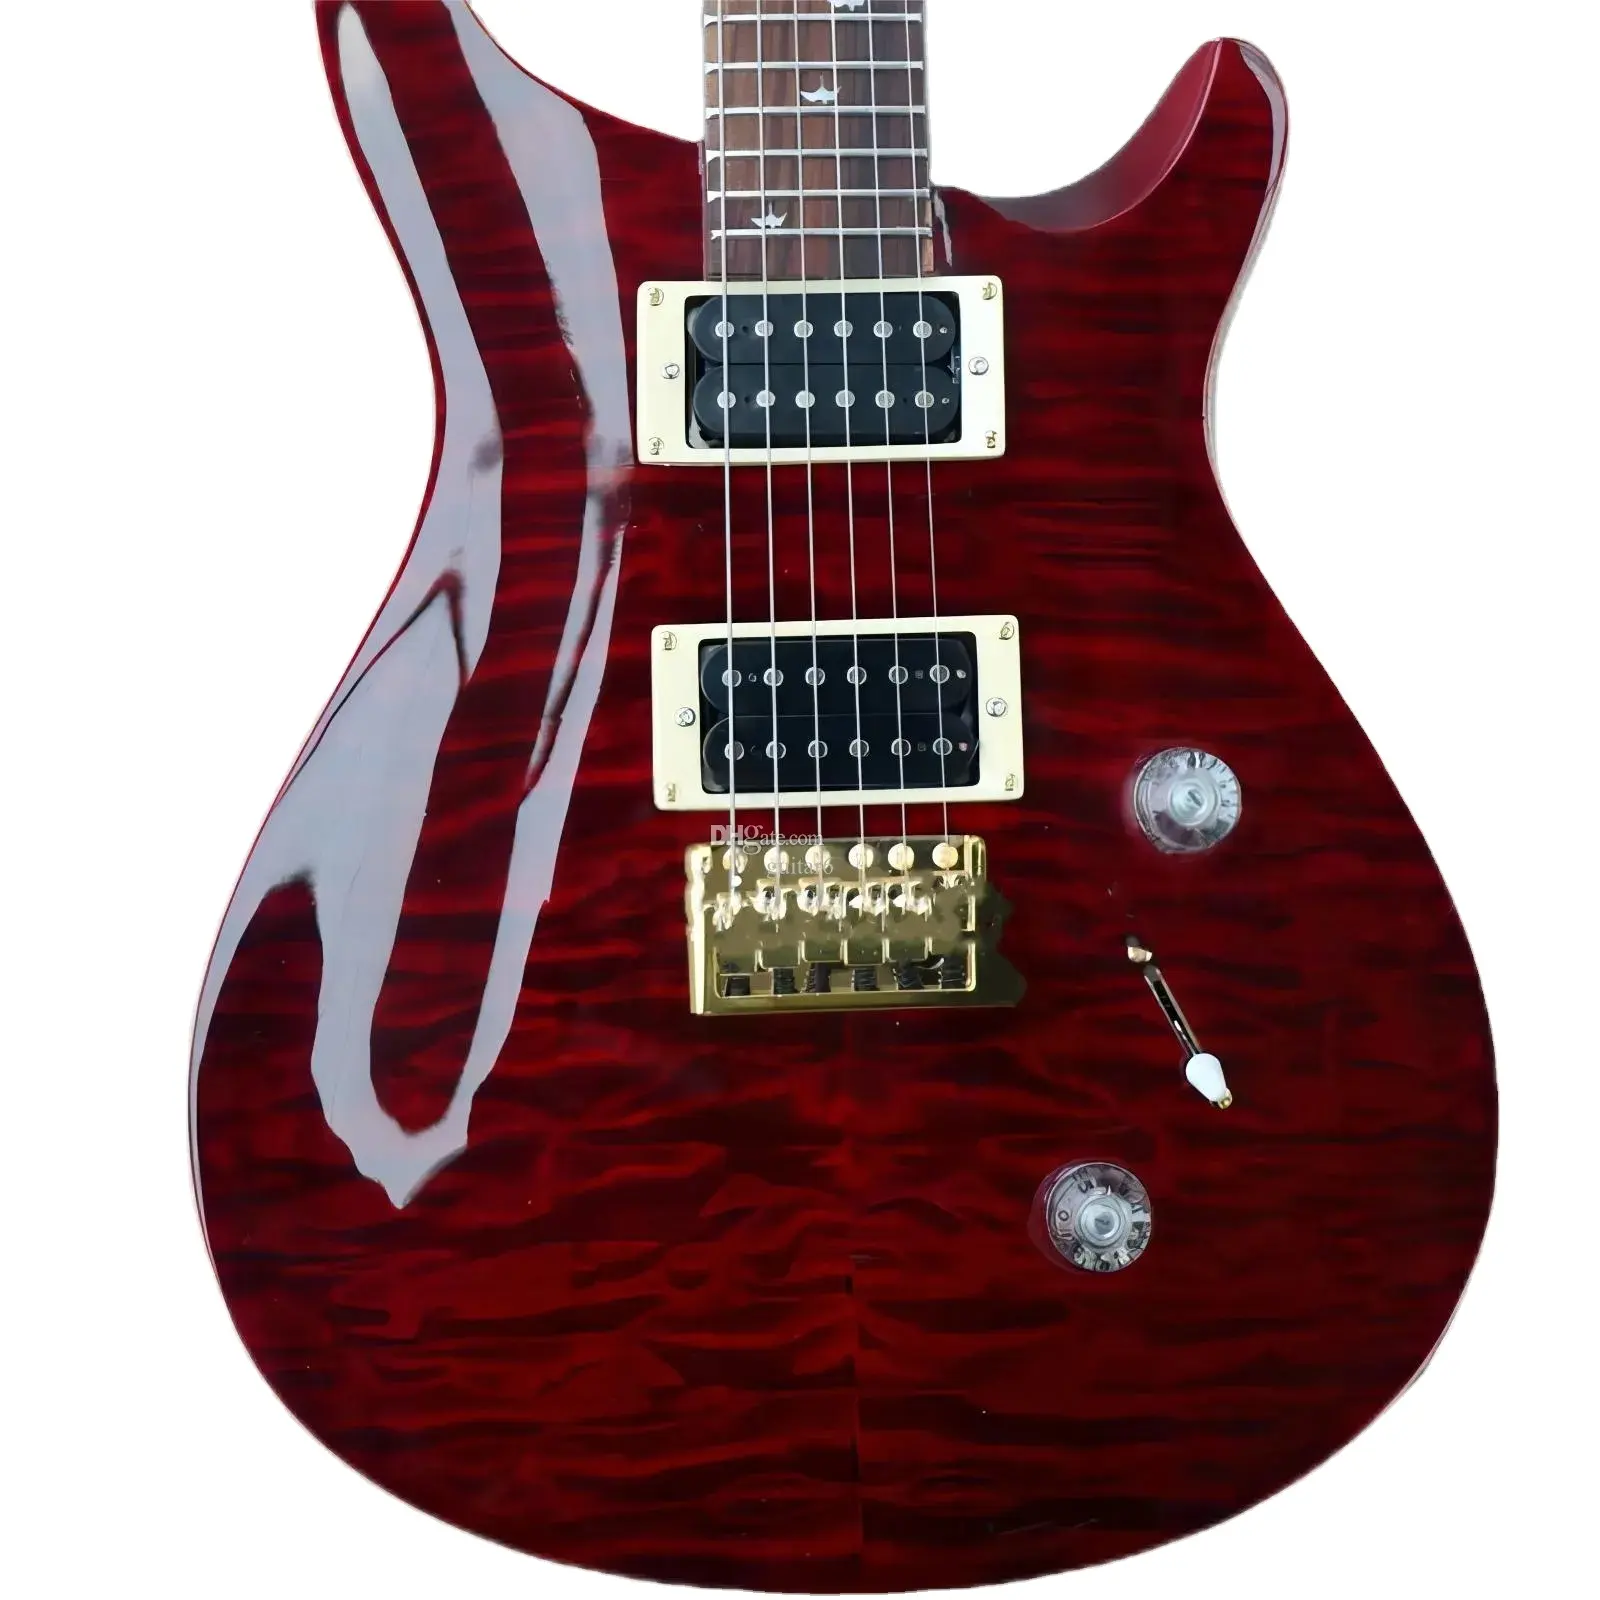 Customized electric guitar, wine red mahogany body, large flowered wood veneer, rosewood fingerboard